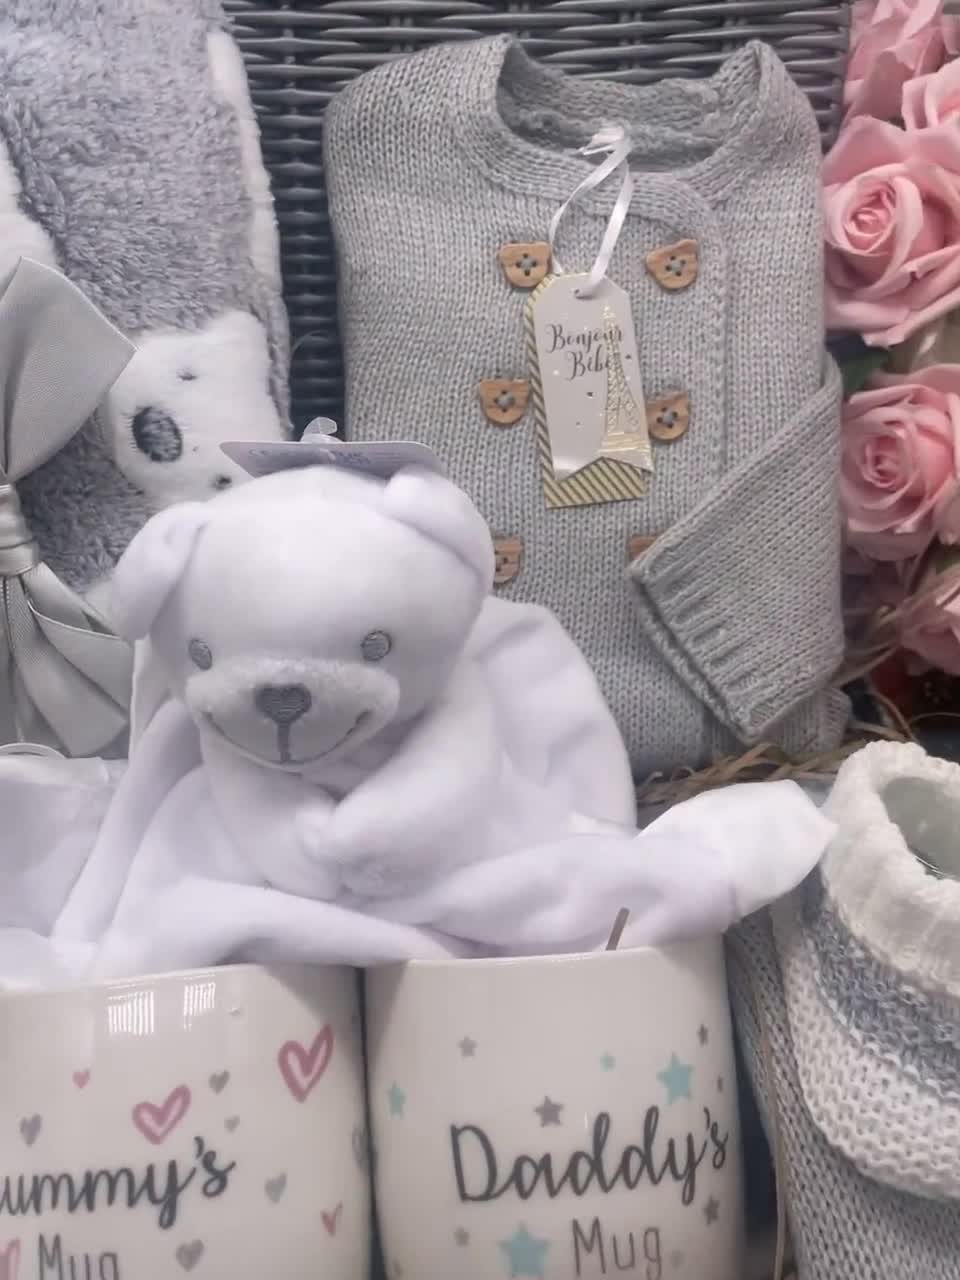 Bambino Deluxe Baby Girl Gift Hamper, Unique Baby Gift Baskets